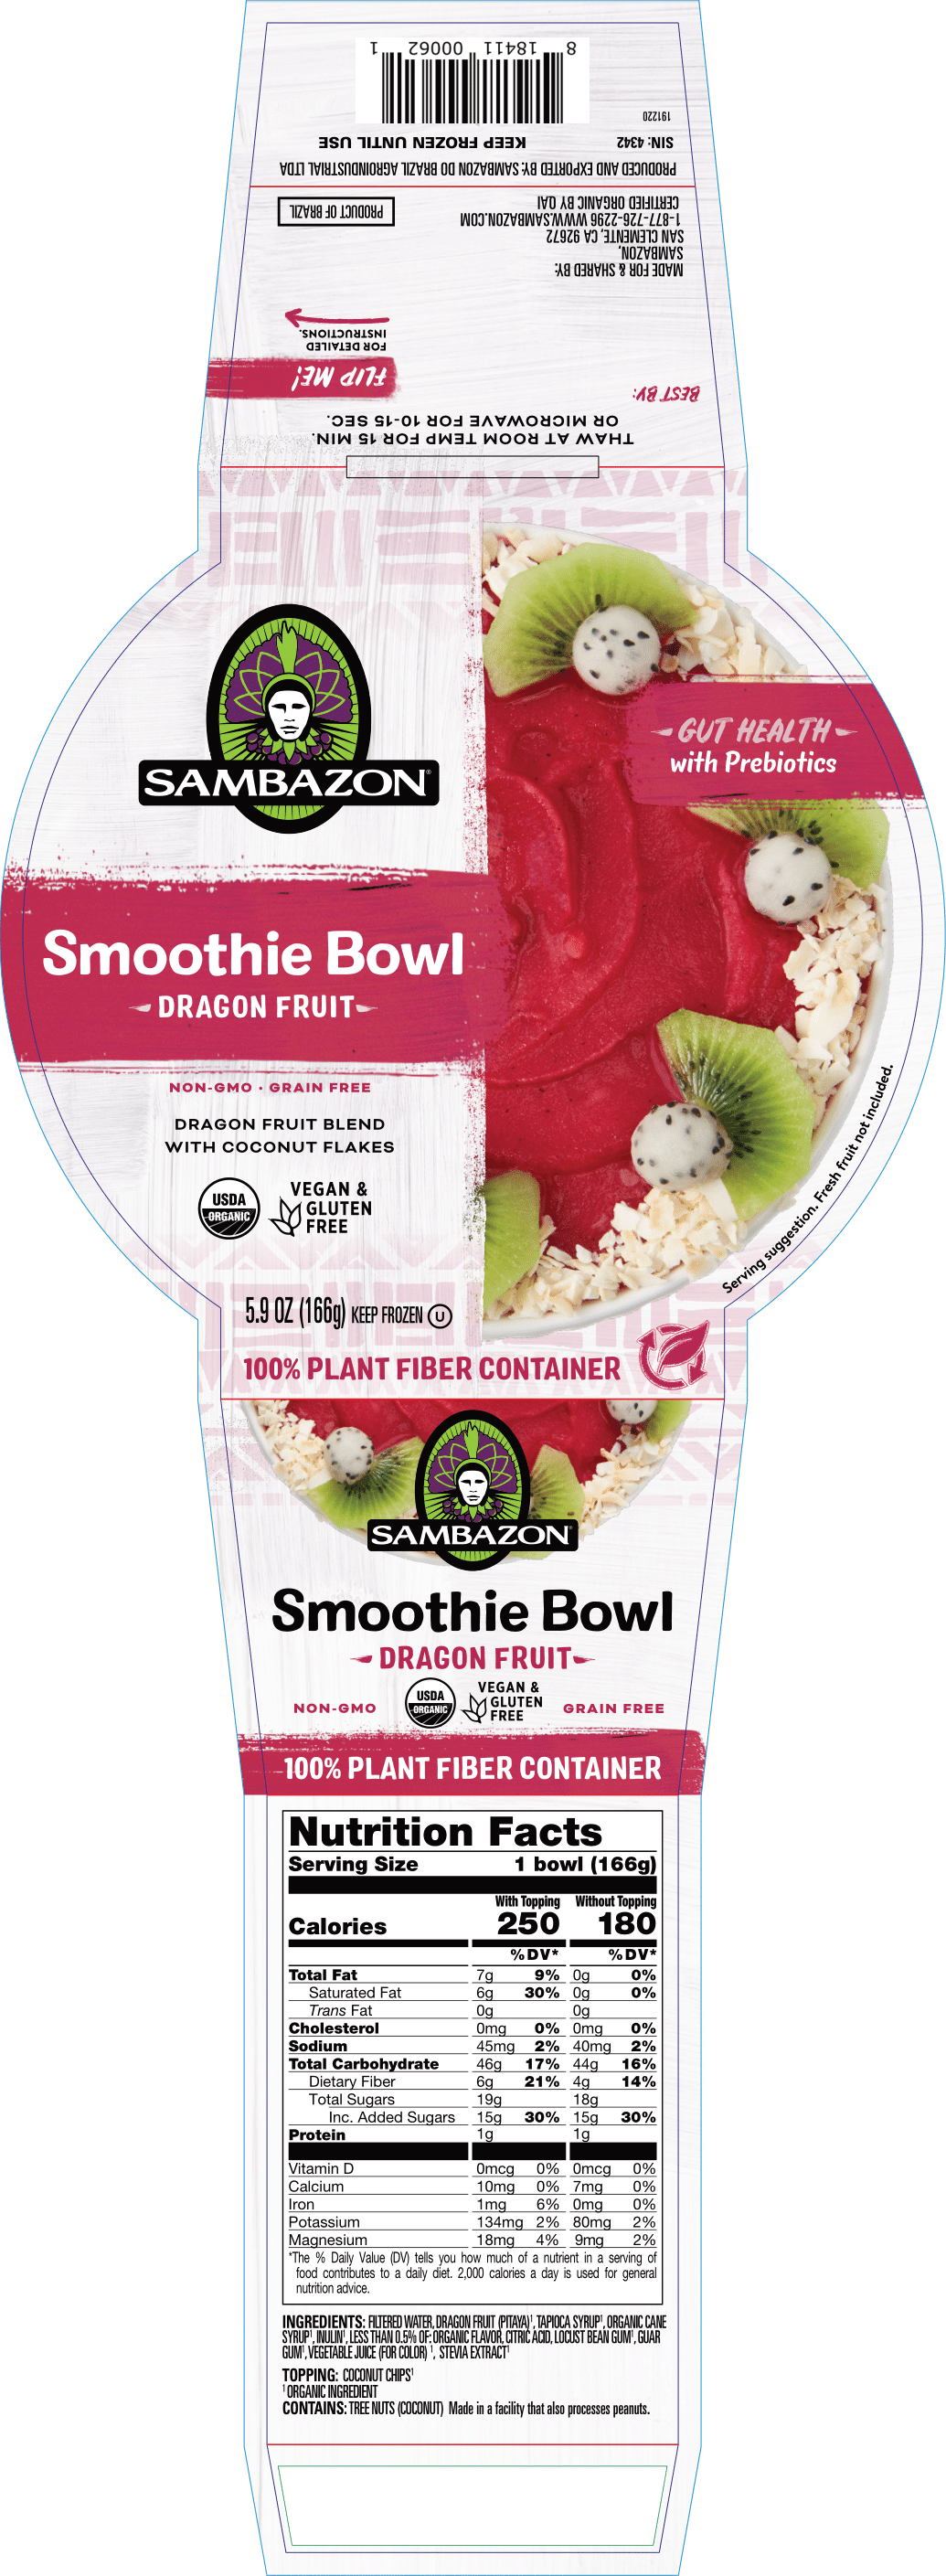 Sambazon Dragon Fruit Smoothie Bowl 8 units per case 5.9 oz Product Label